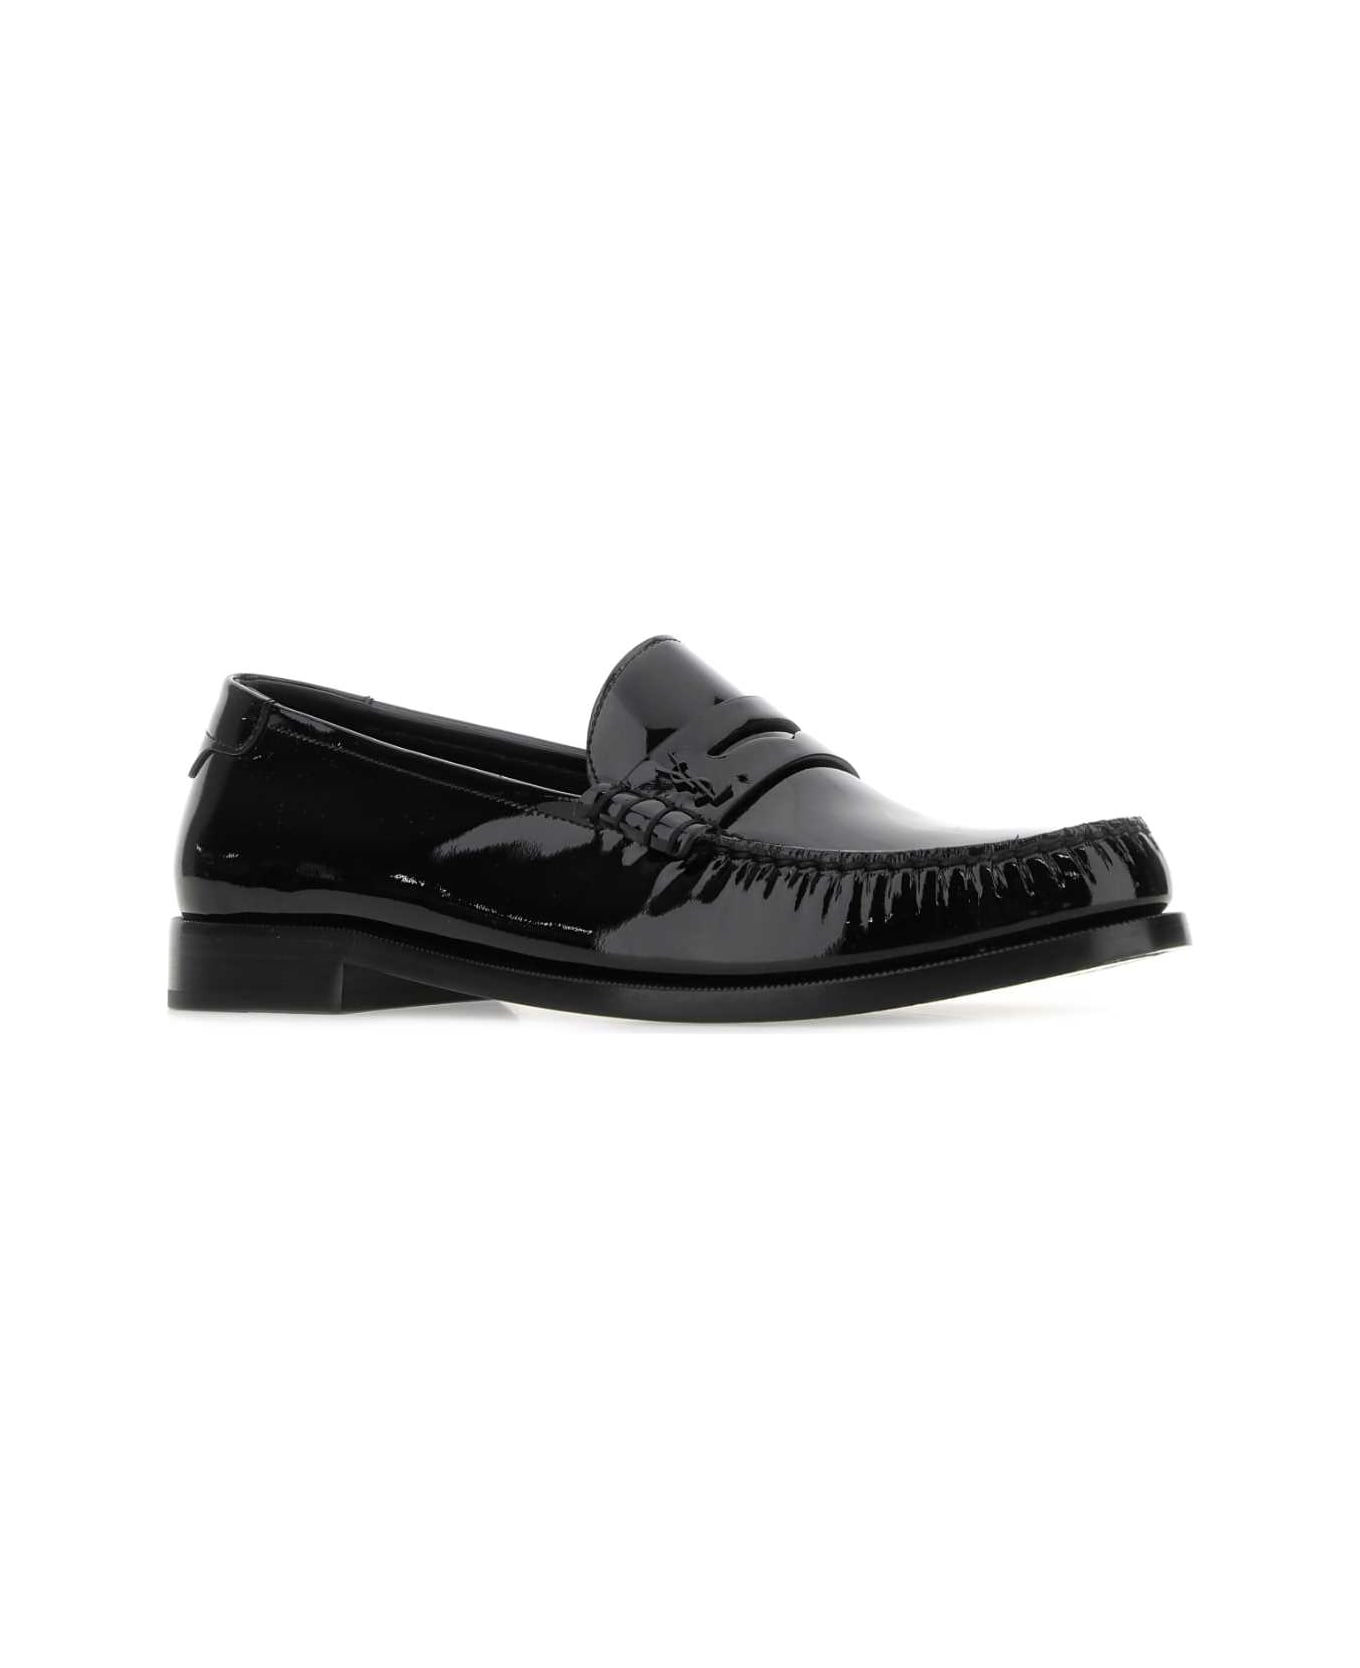 Saint Laurent Black Leather Loafers - Black